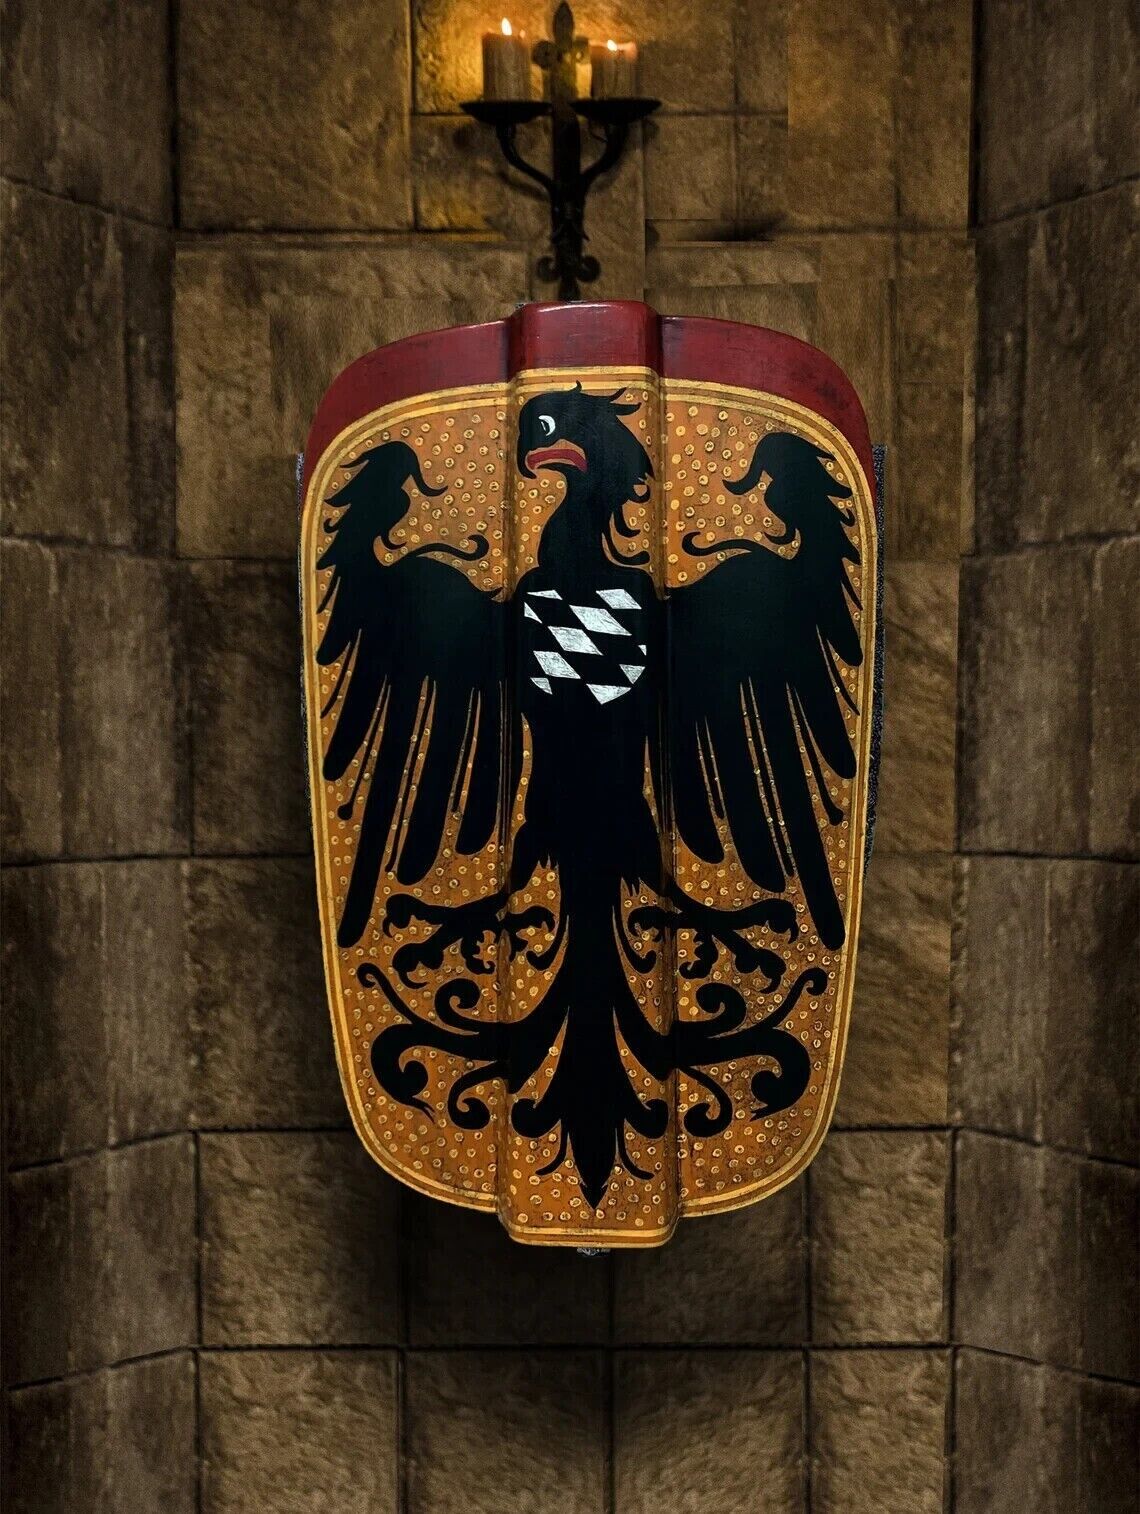 Authentic 15th Century German Pavise shield